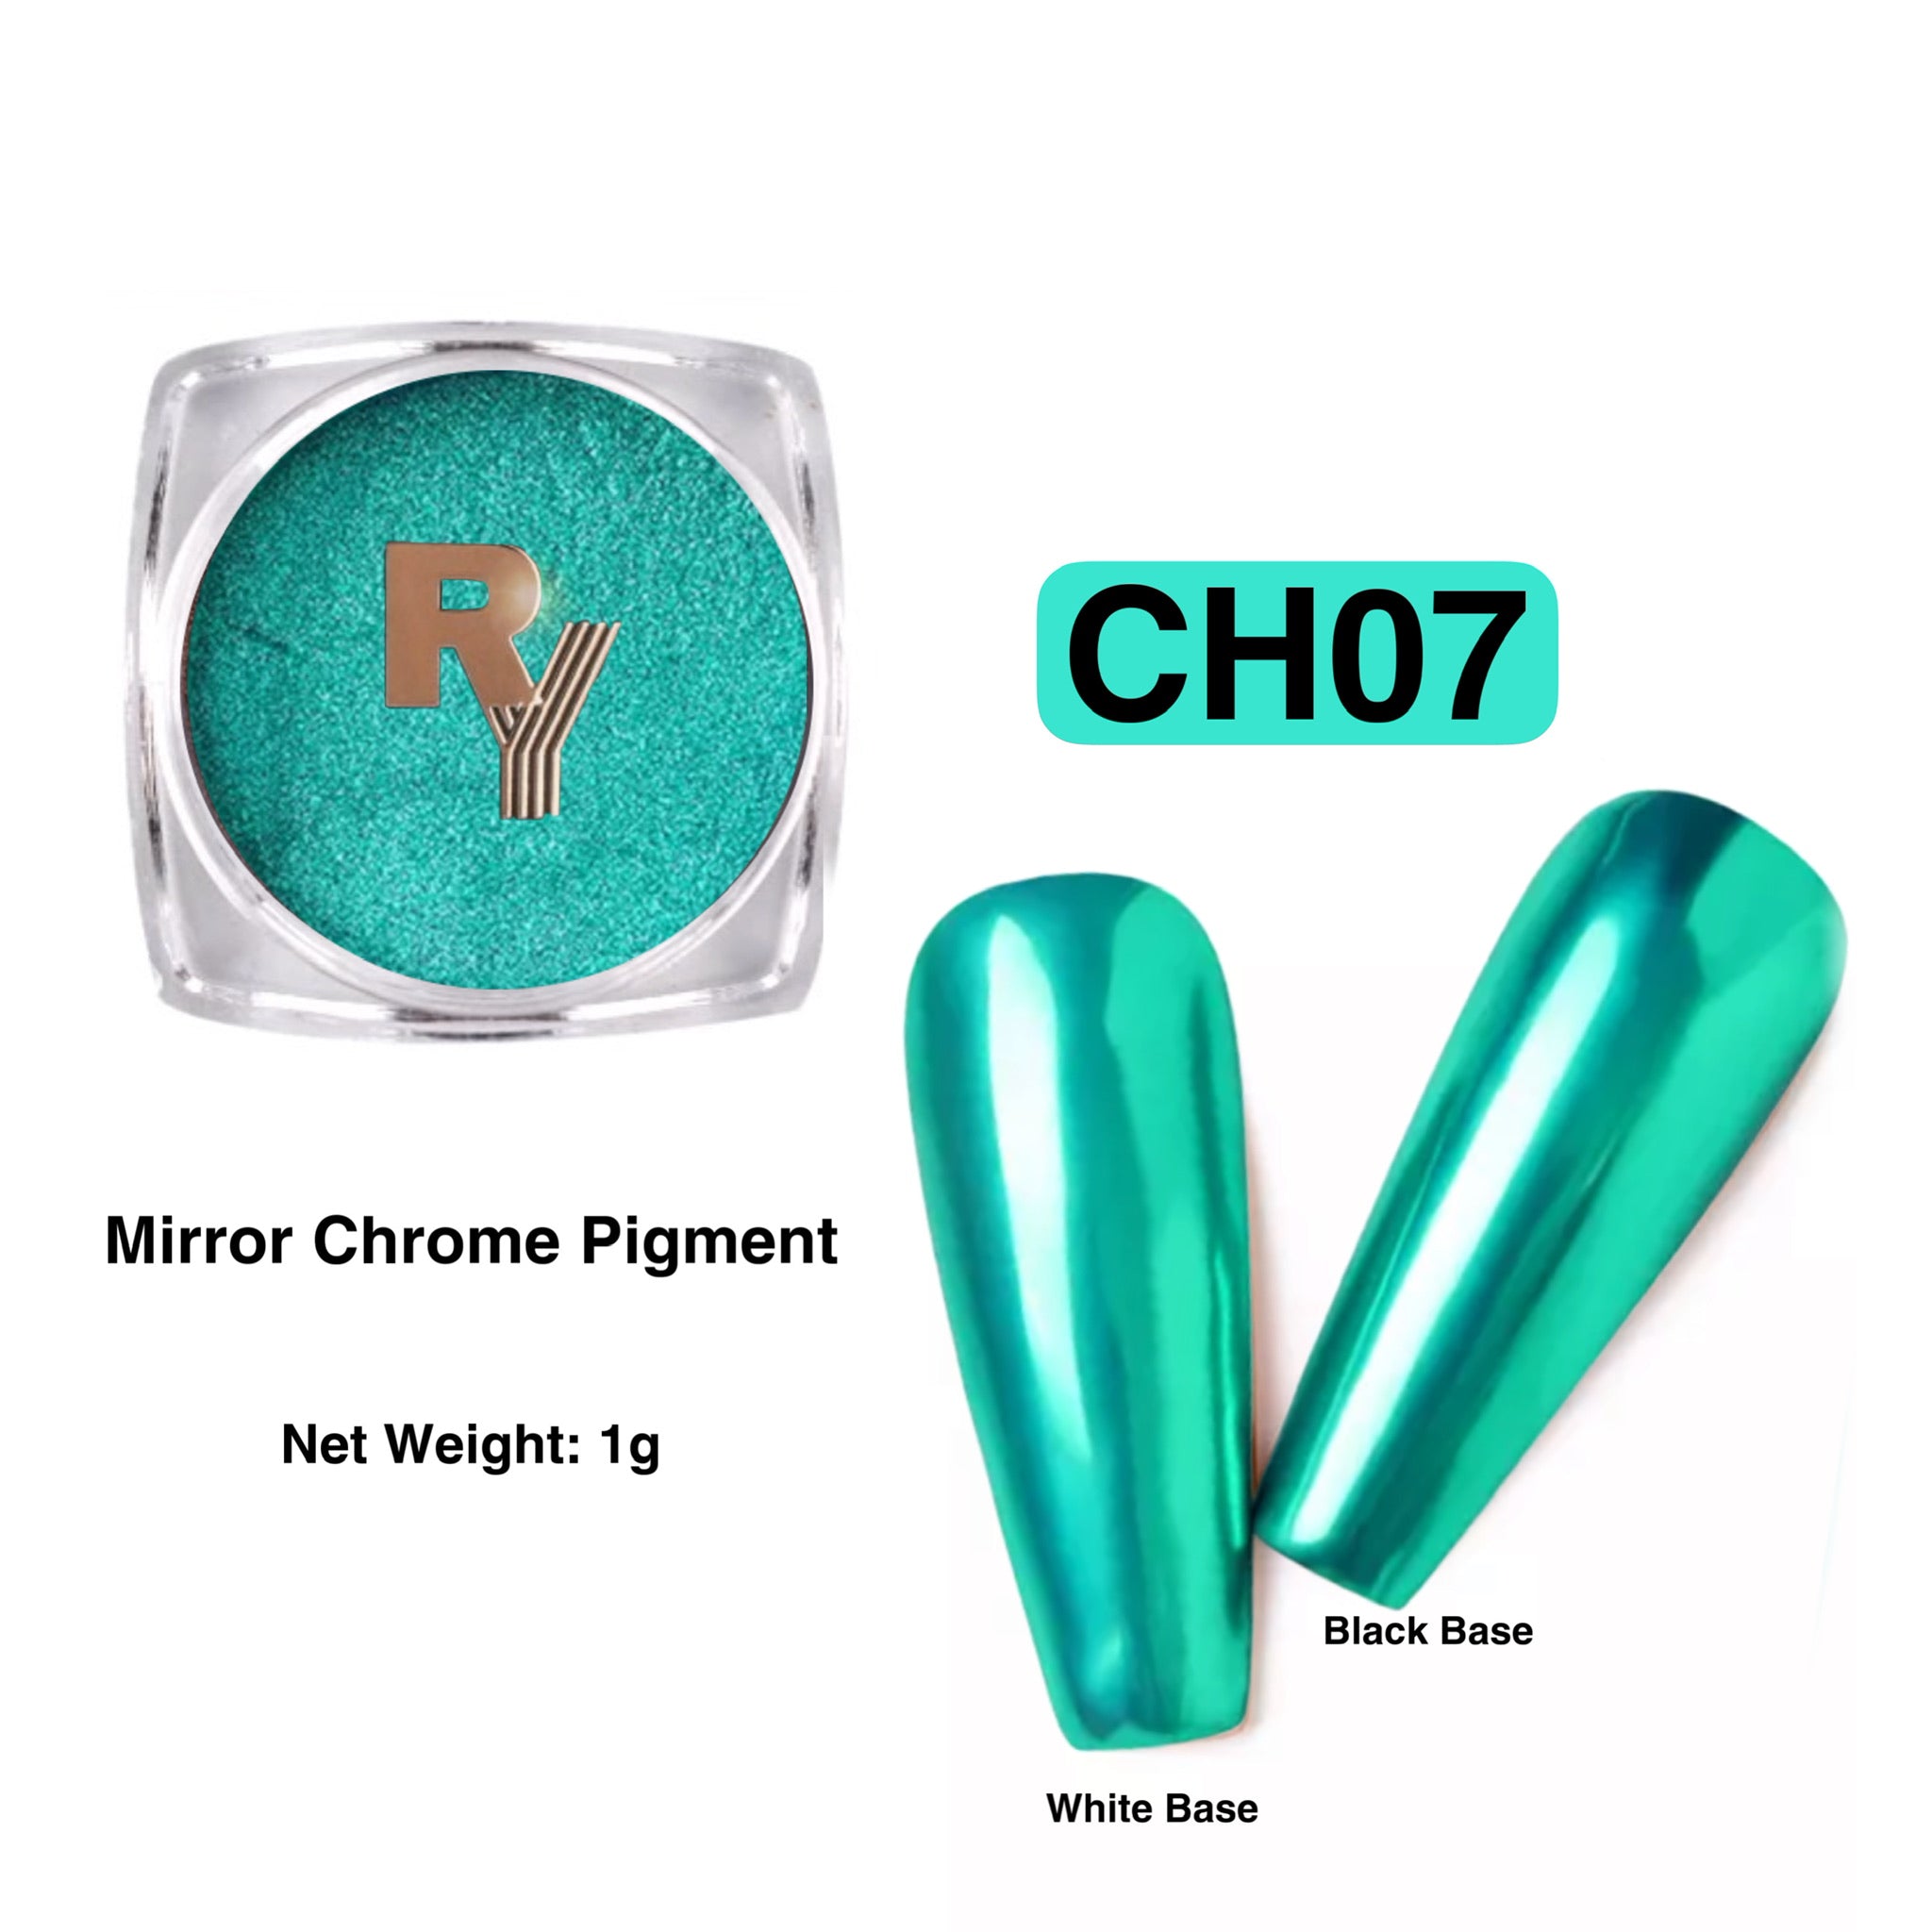 CH07 Chrome